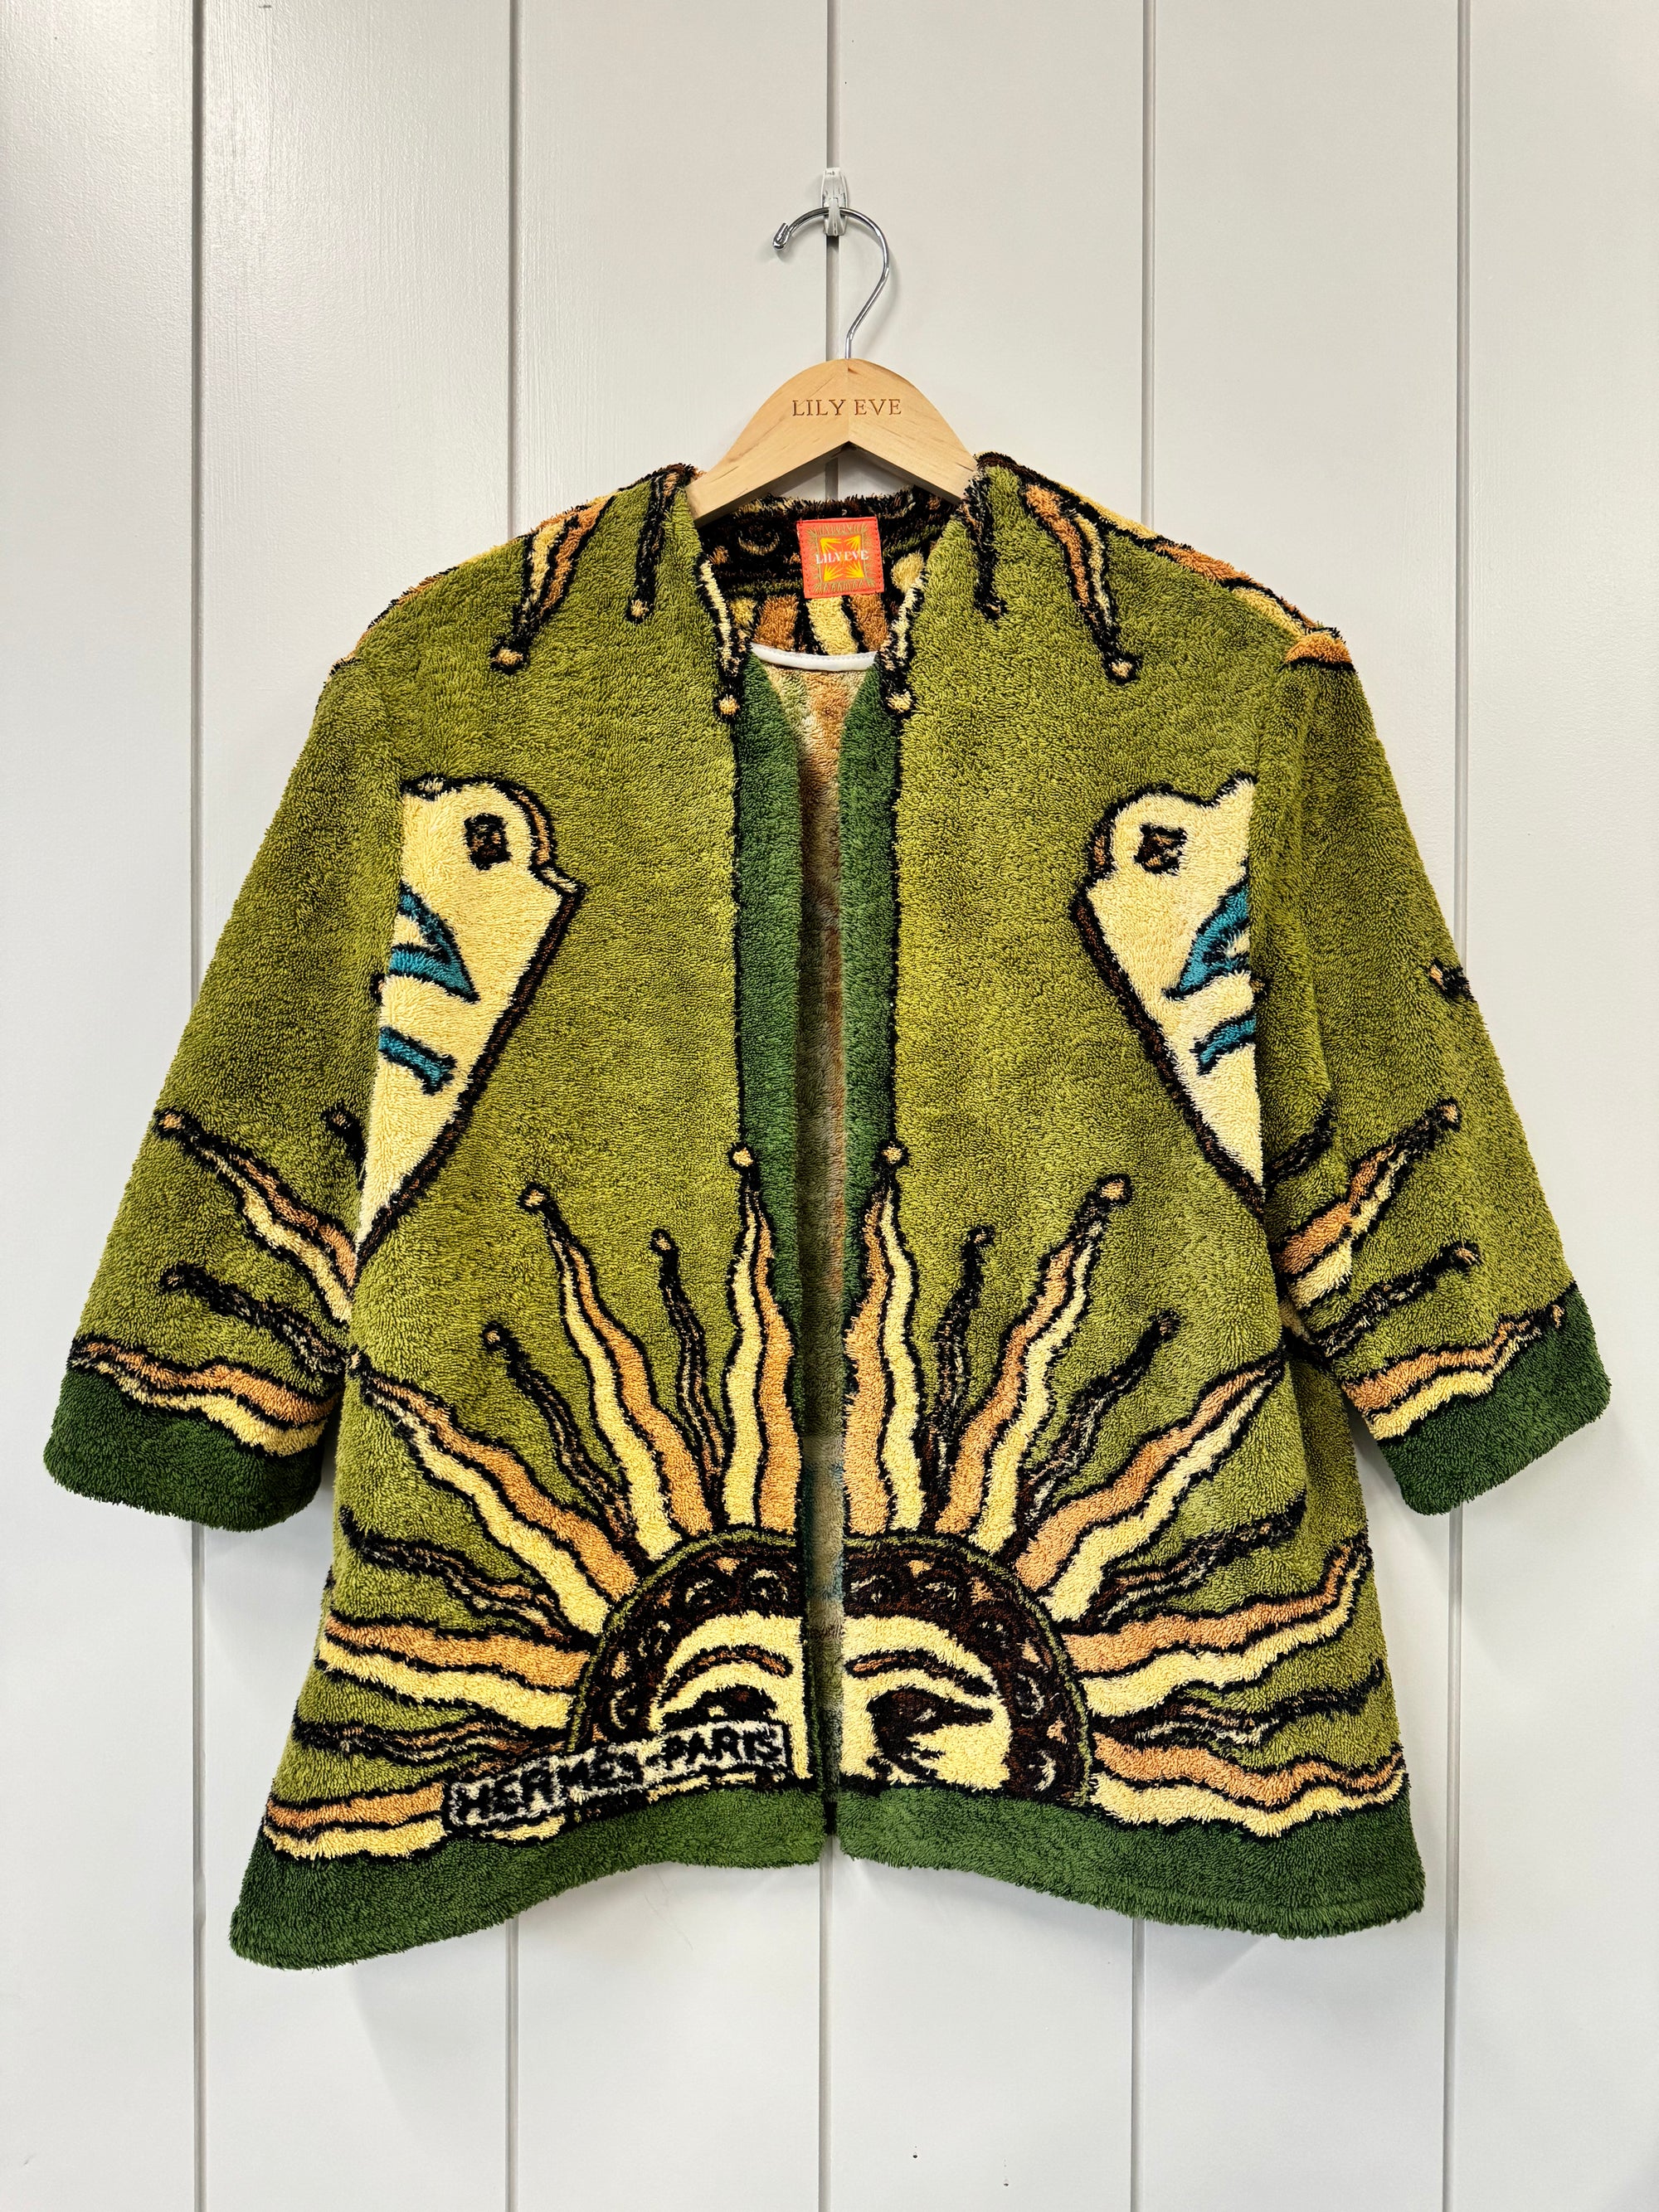 The Green SunDial Jacket